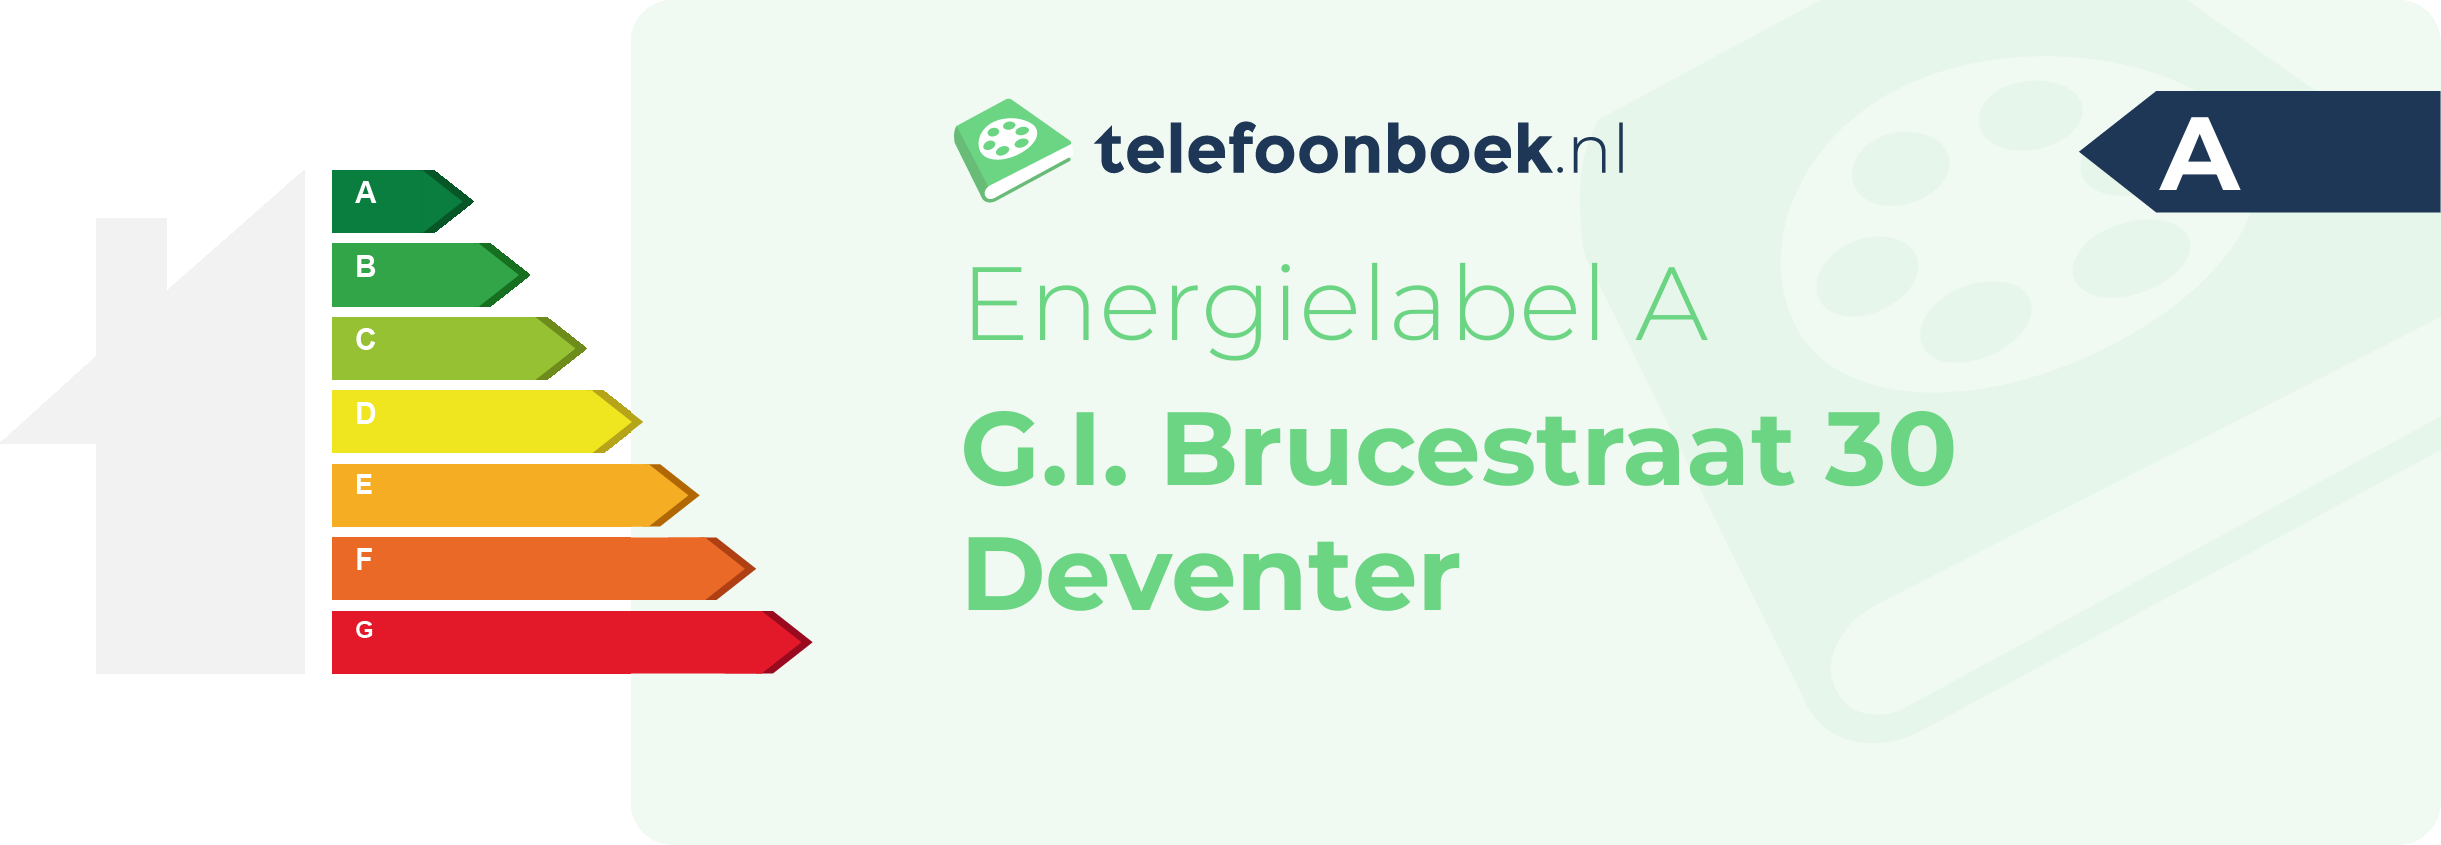 Energielabel G.I. Brucestraat 30 Deventer